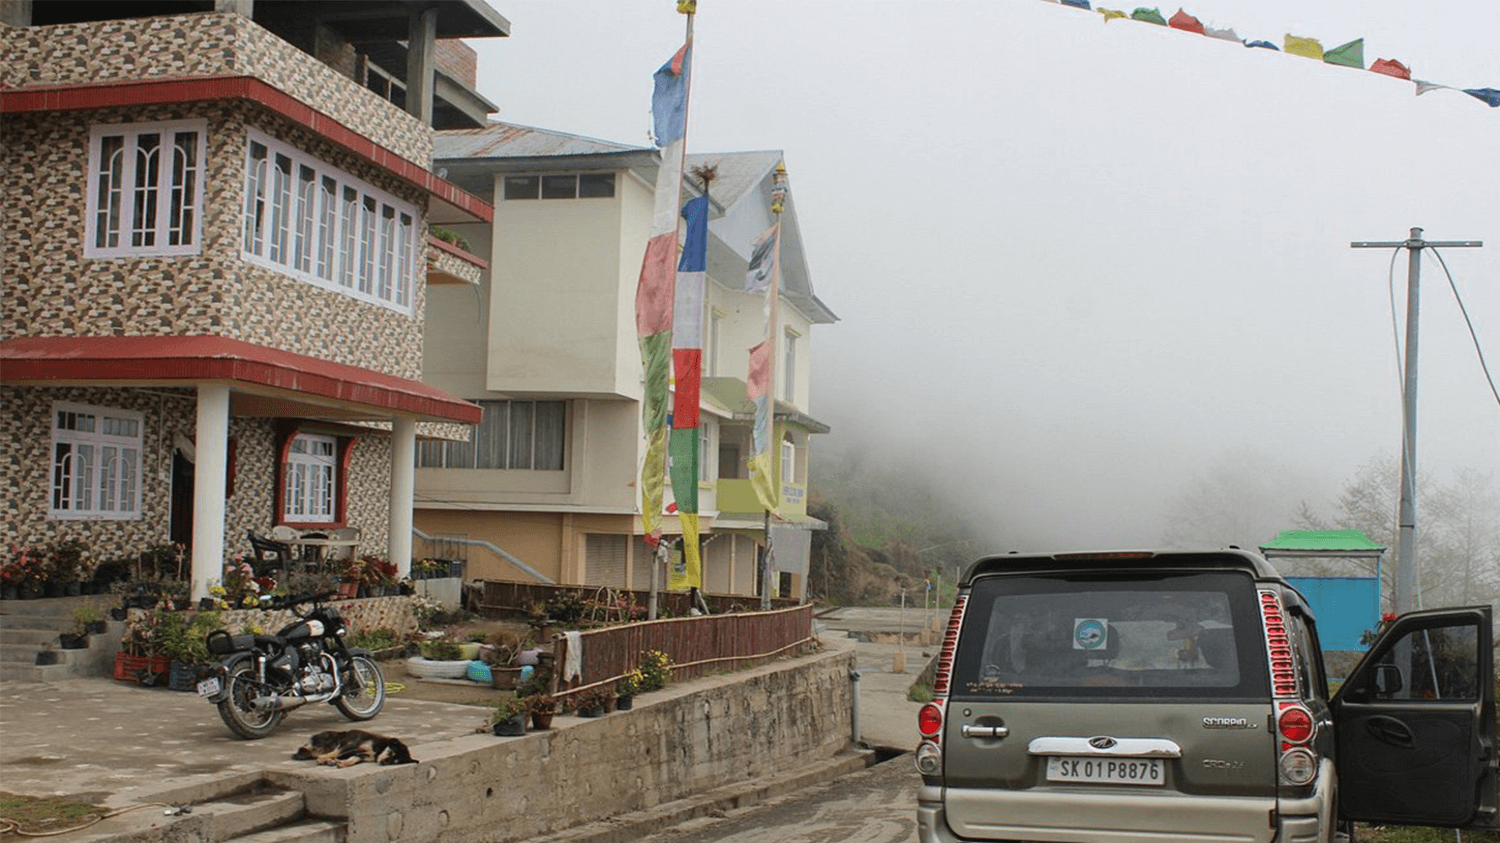 Kyilkhor Inn, Okhrey, Sikkim, India